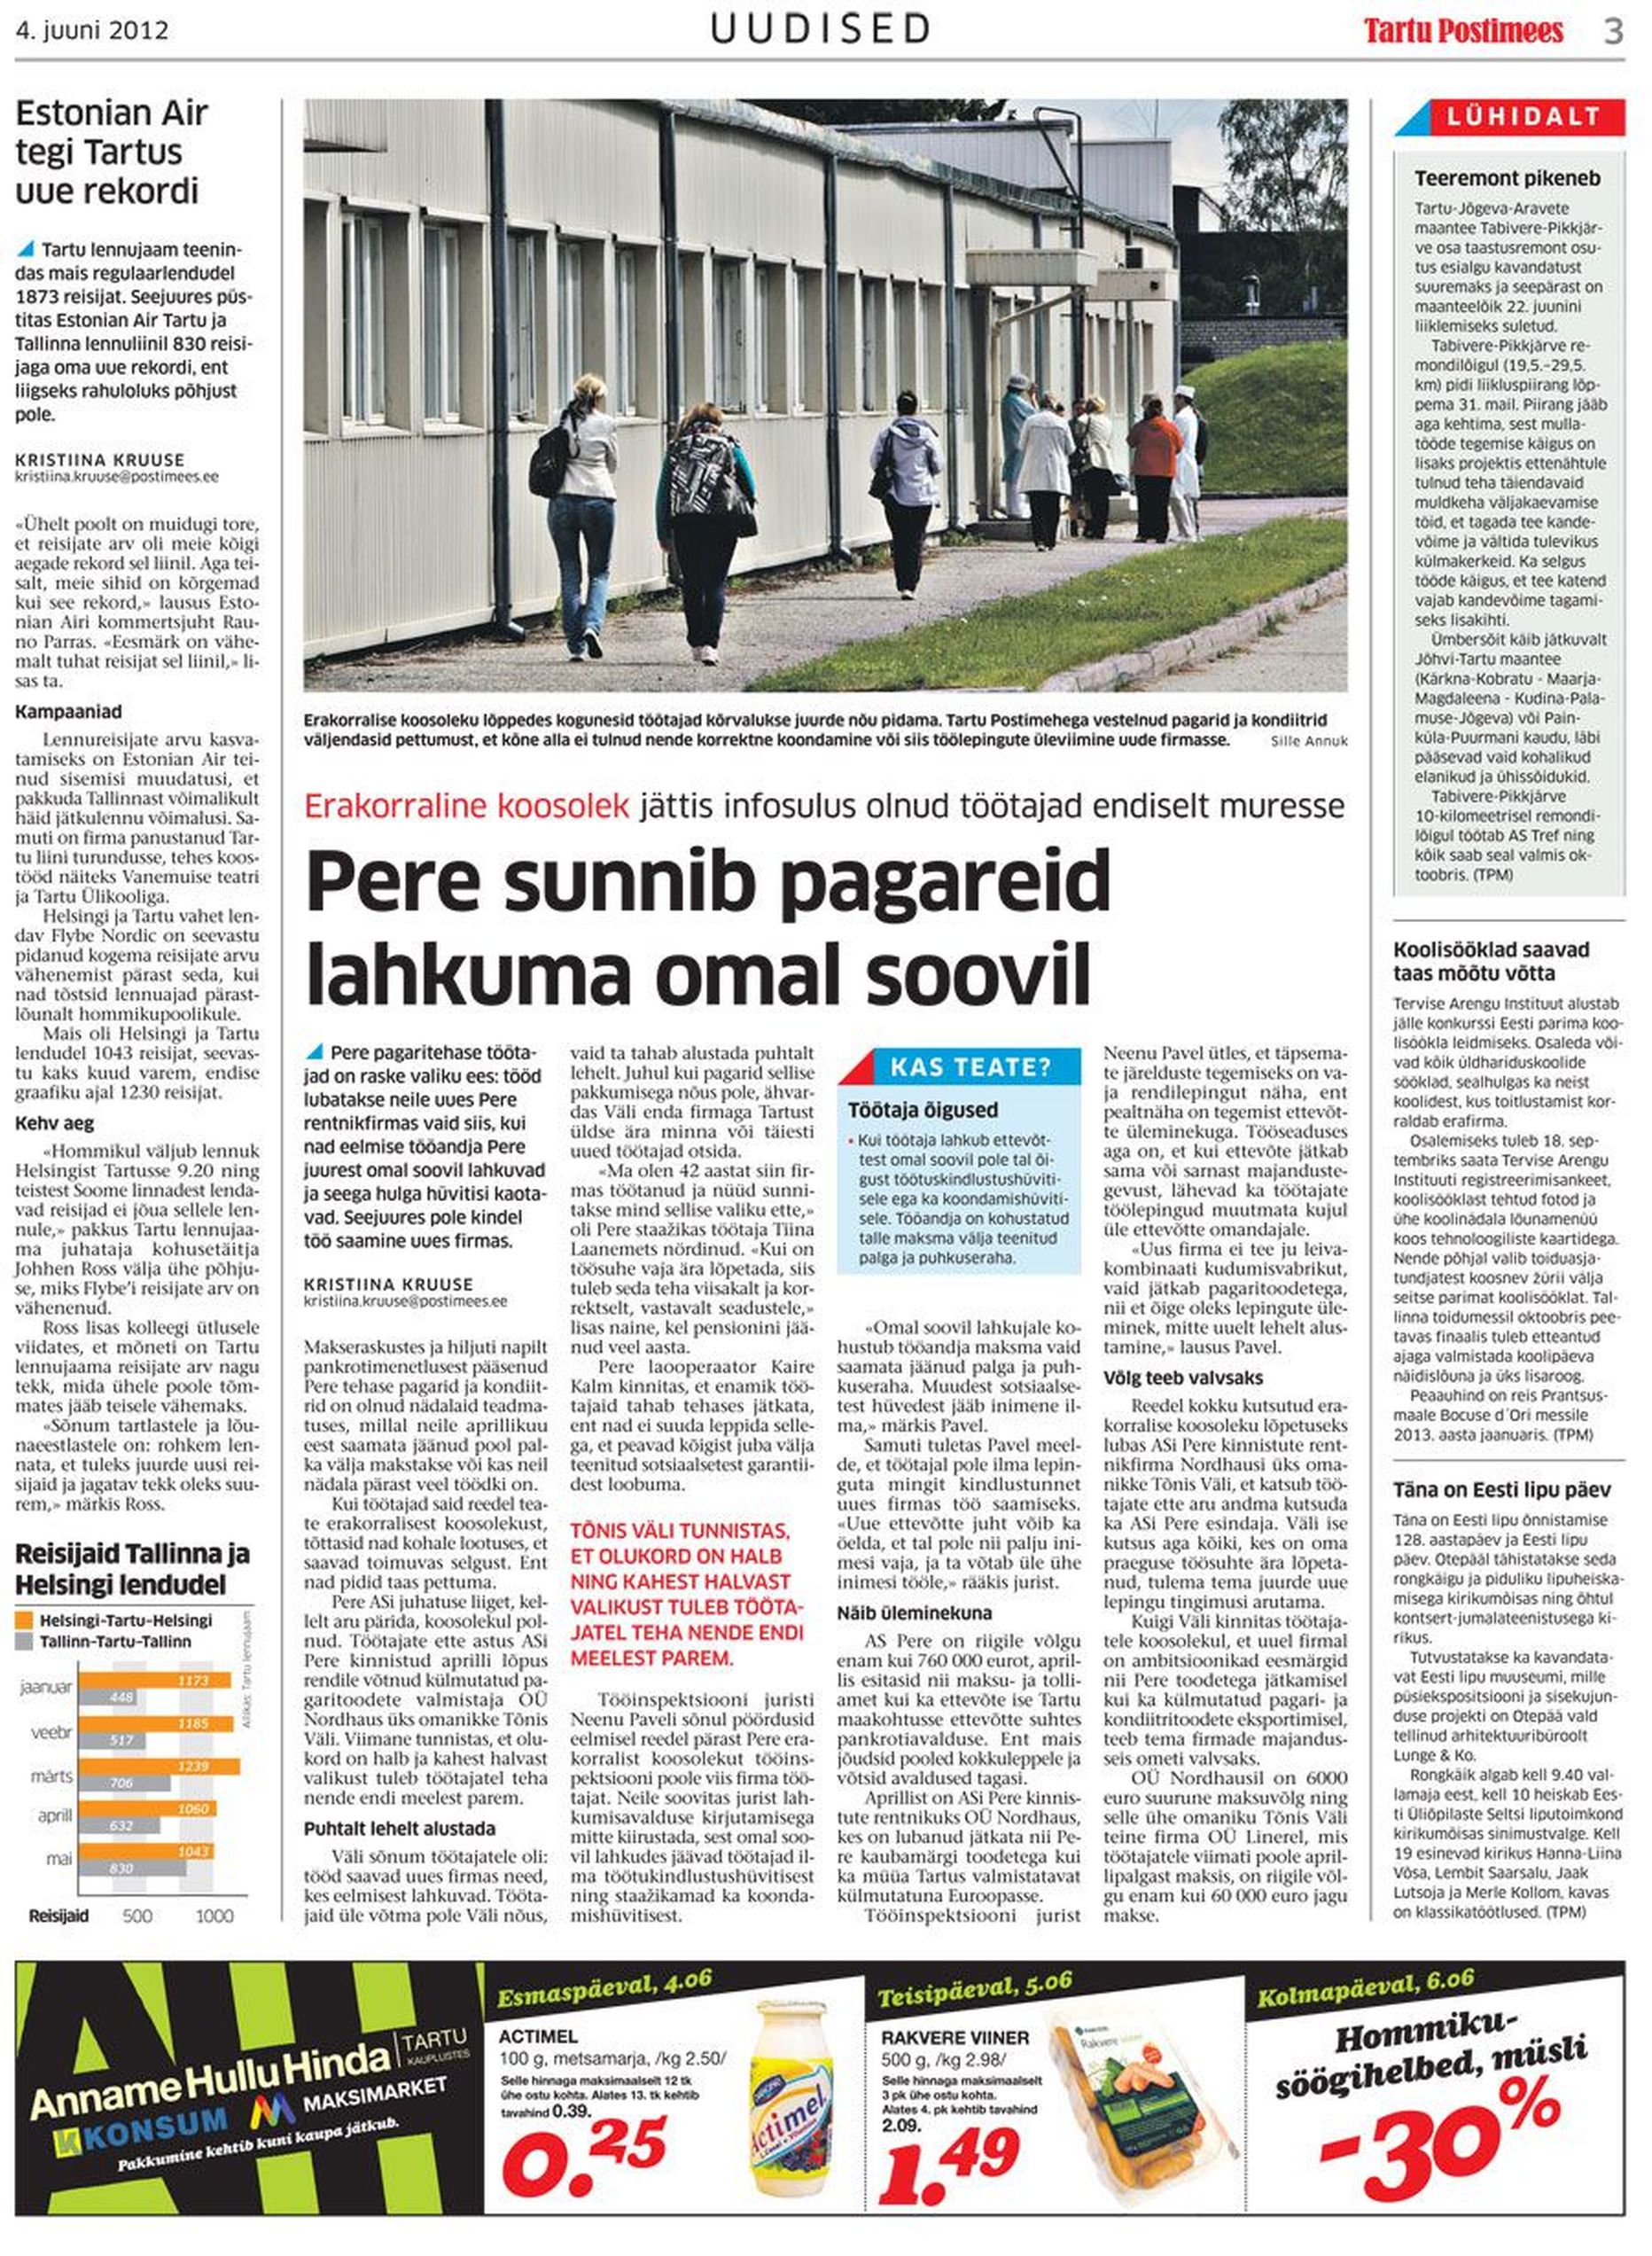 Tartu Postimees kirjutas AS Pere probleemidest 4. juunil.